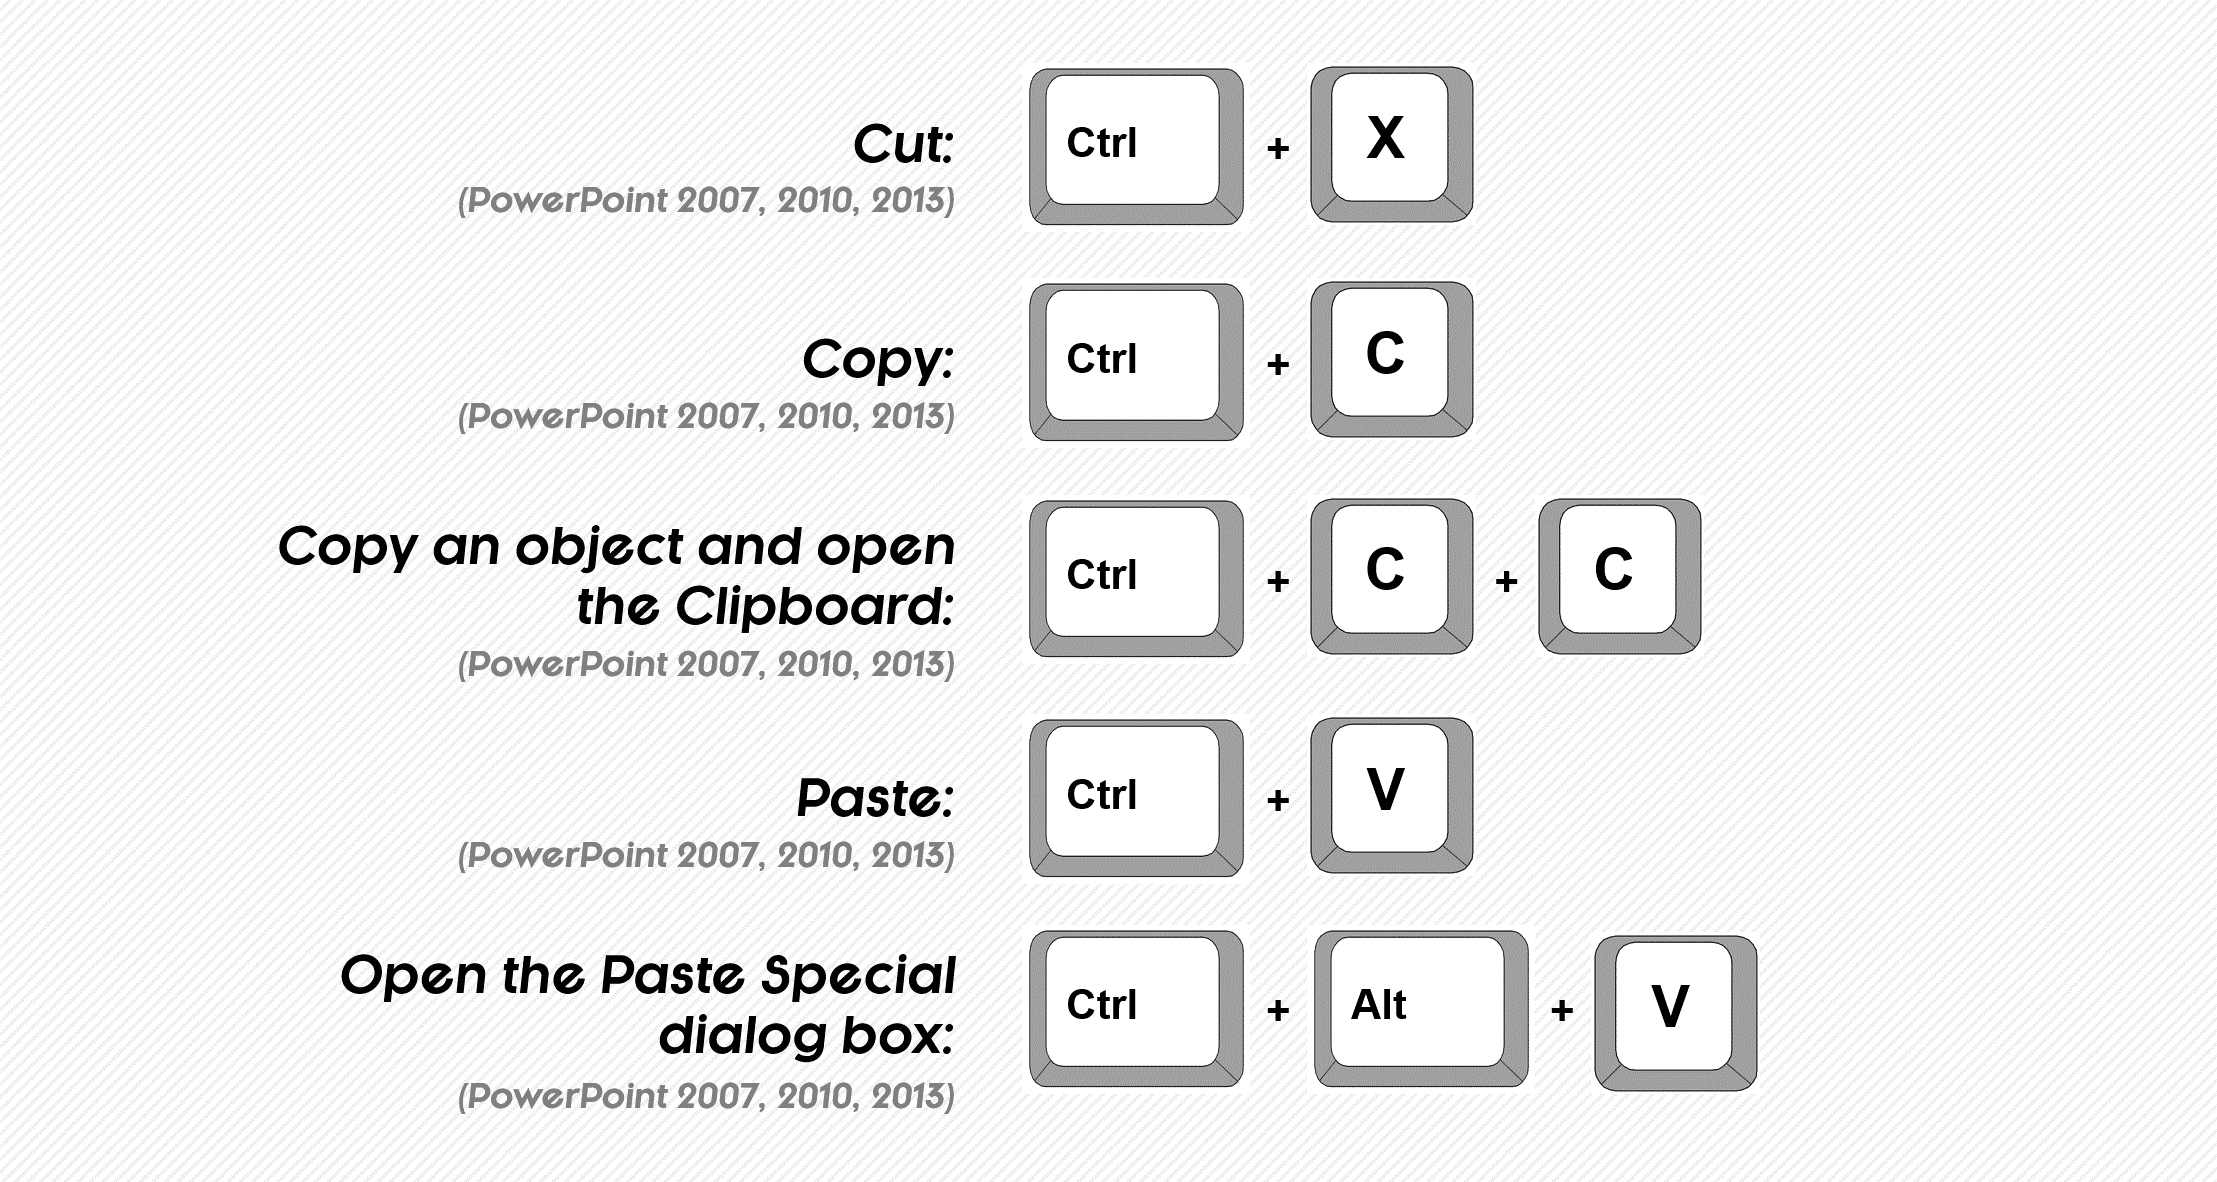 powerpoint presenter view shortcut keys